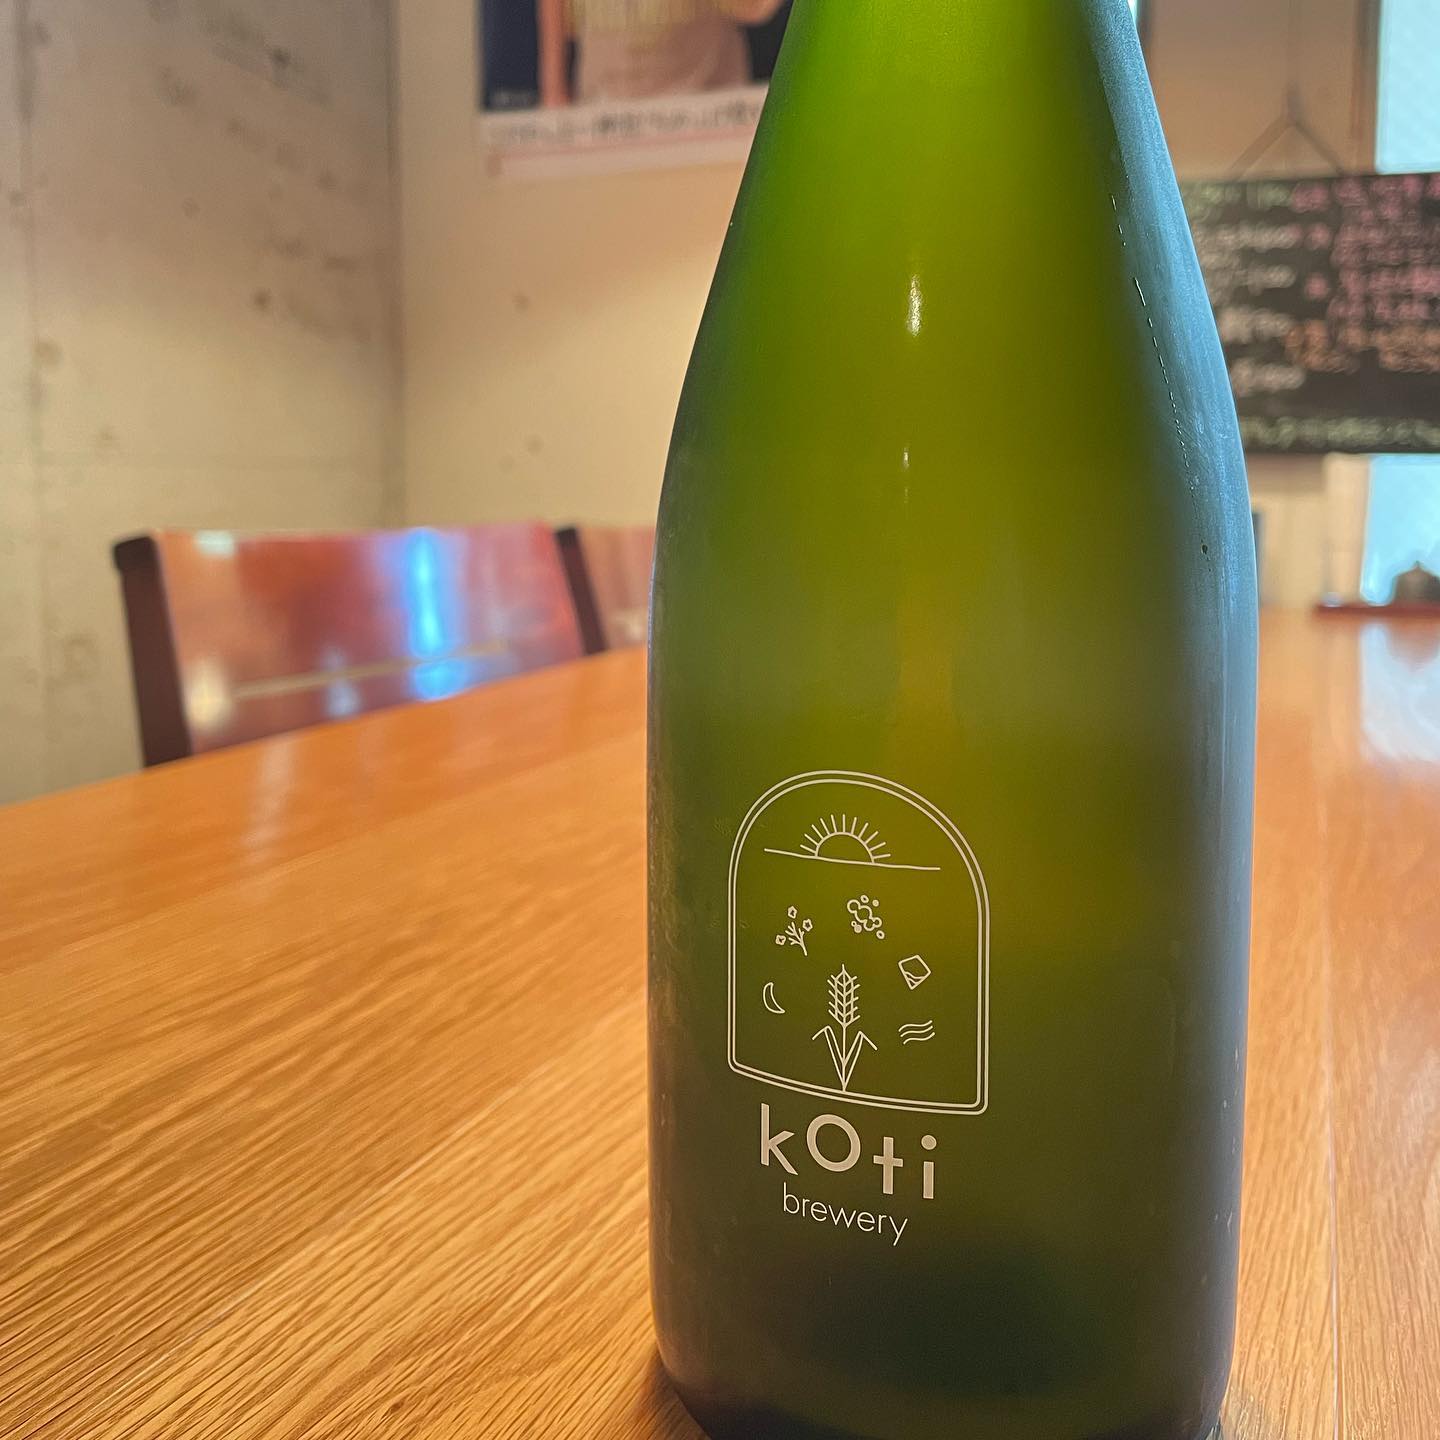 Kotiビール再入荷しました♪グラスでもボトルでもオッケーよ週末まだお席の空きあります。お問合せお待ちしてます♪#イルフェソワフ #ワイン#日本酒 #薬院#警固#焼き鳥